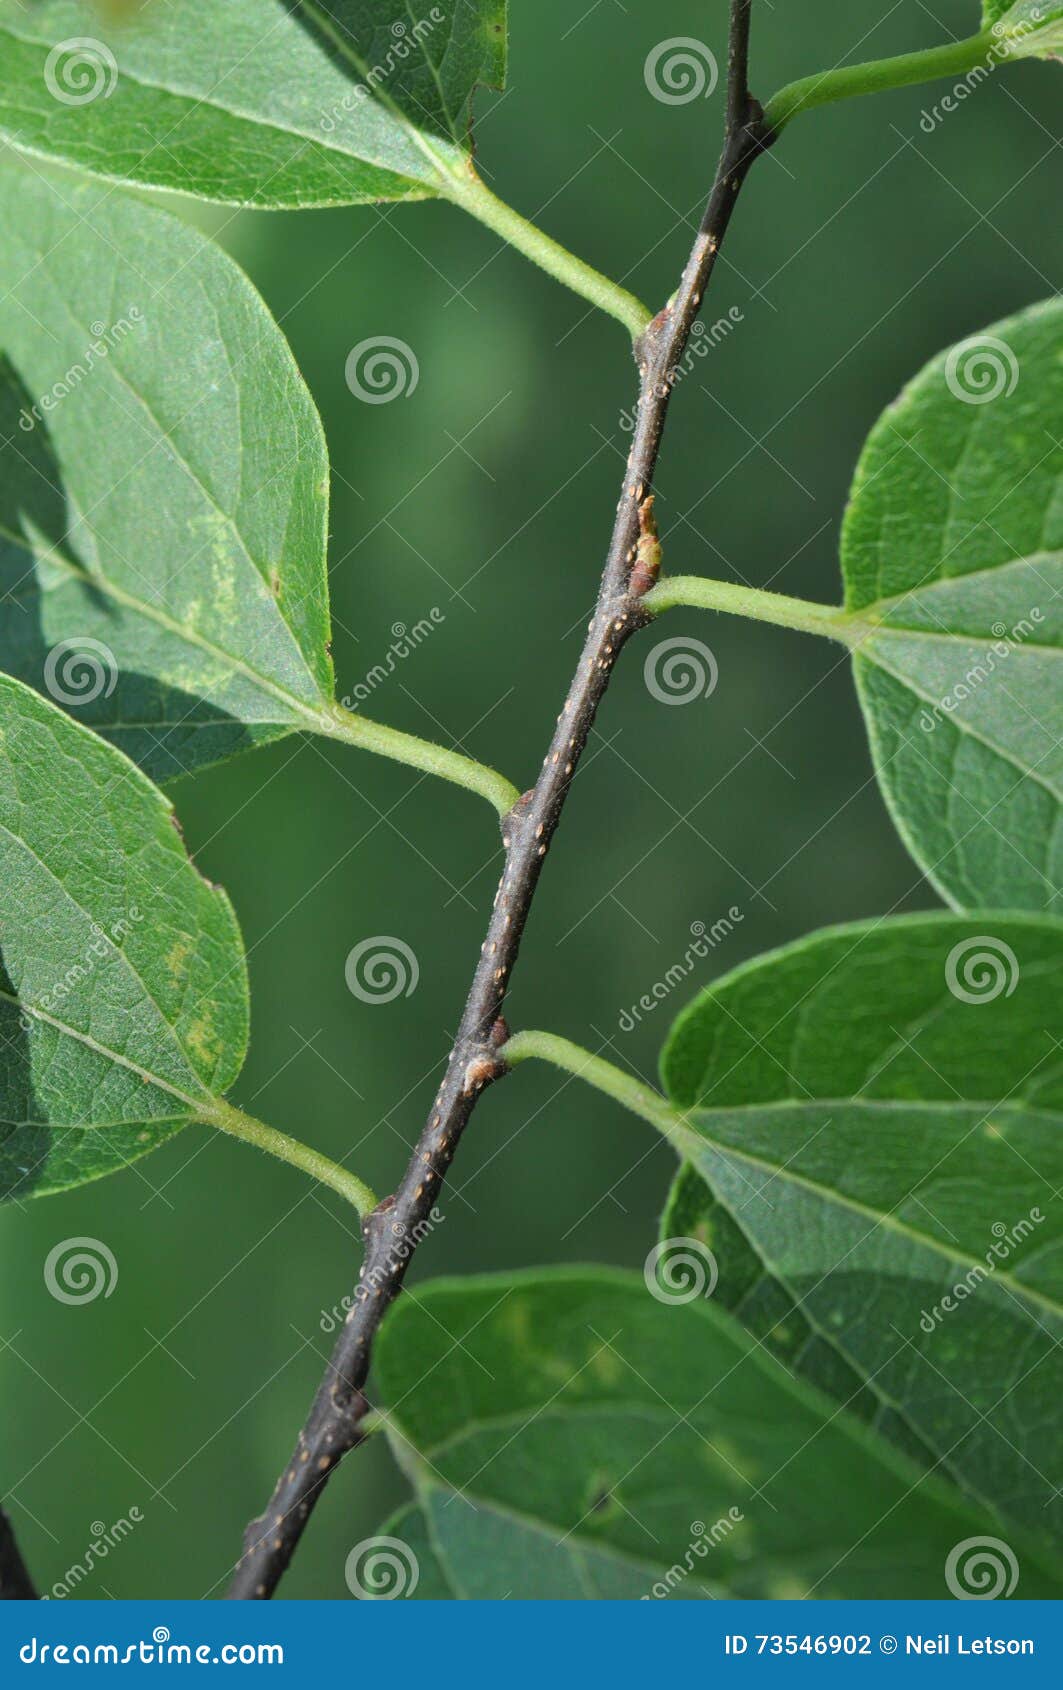 basic tree identification: alternate leaf arrangement